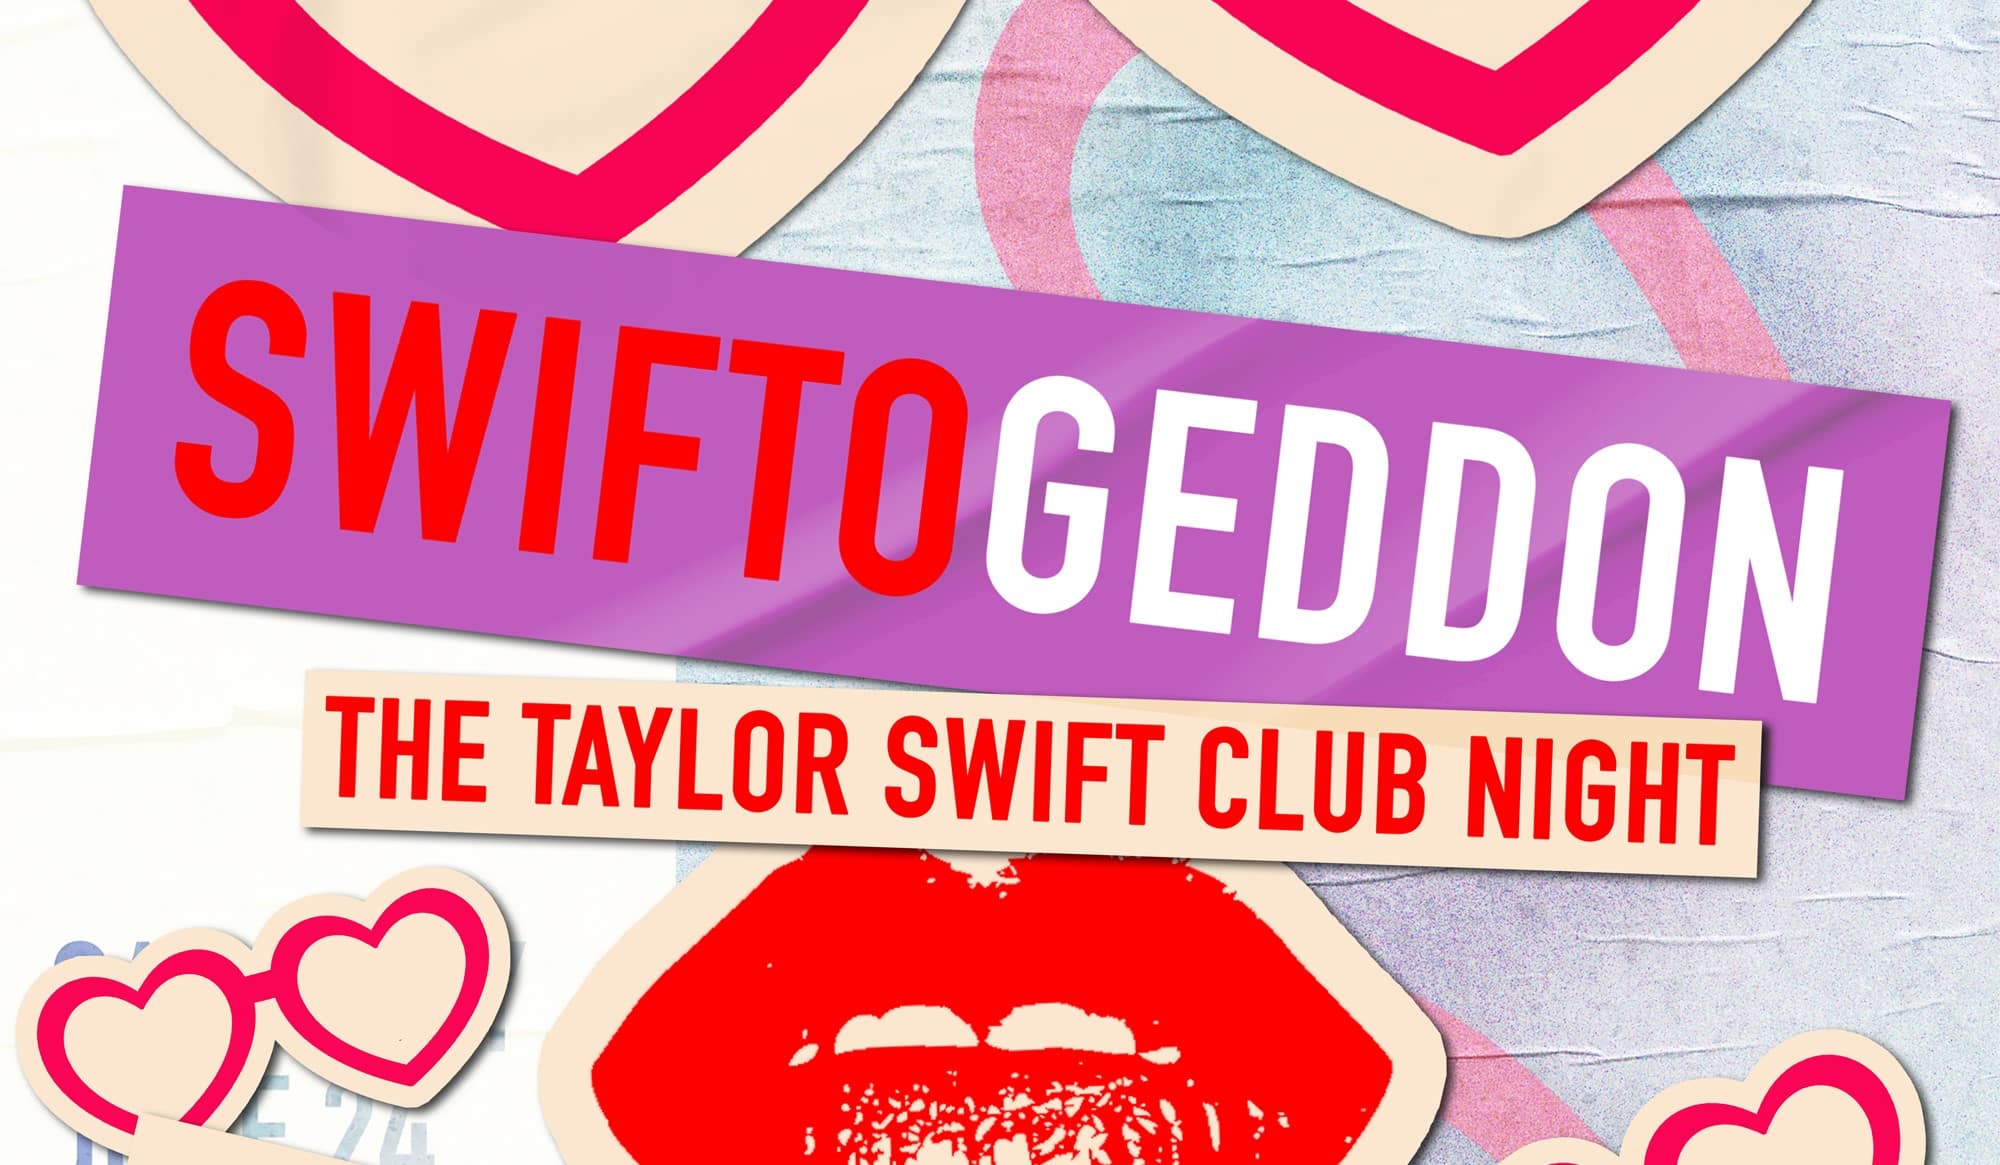 Swiftogeddon: The Taylor Swift Club Night